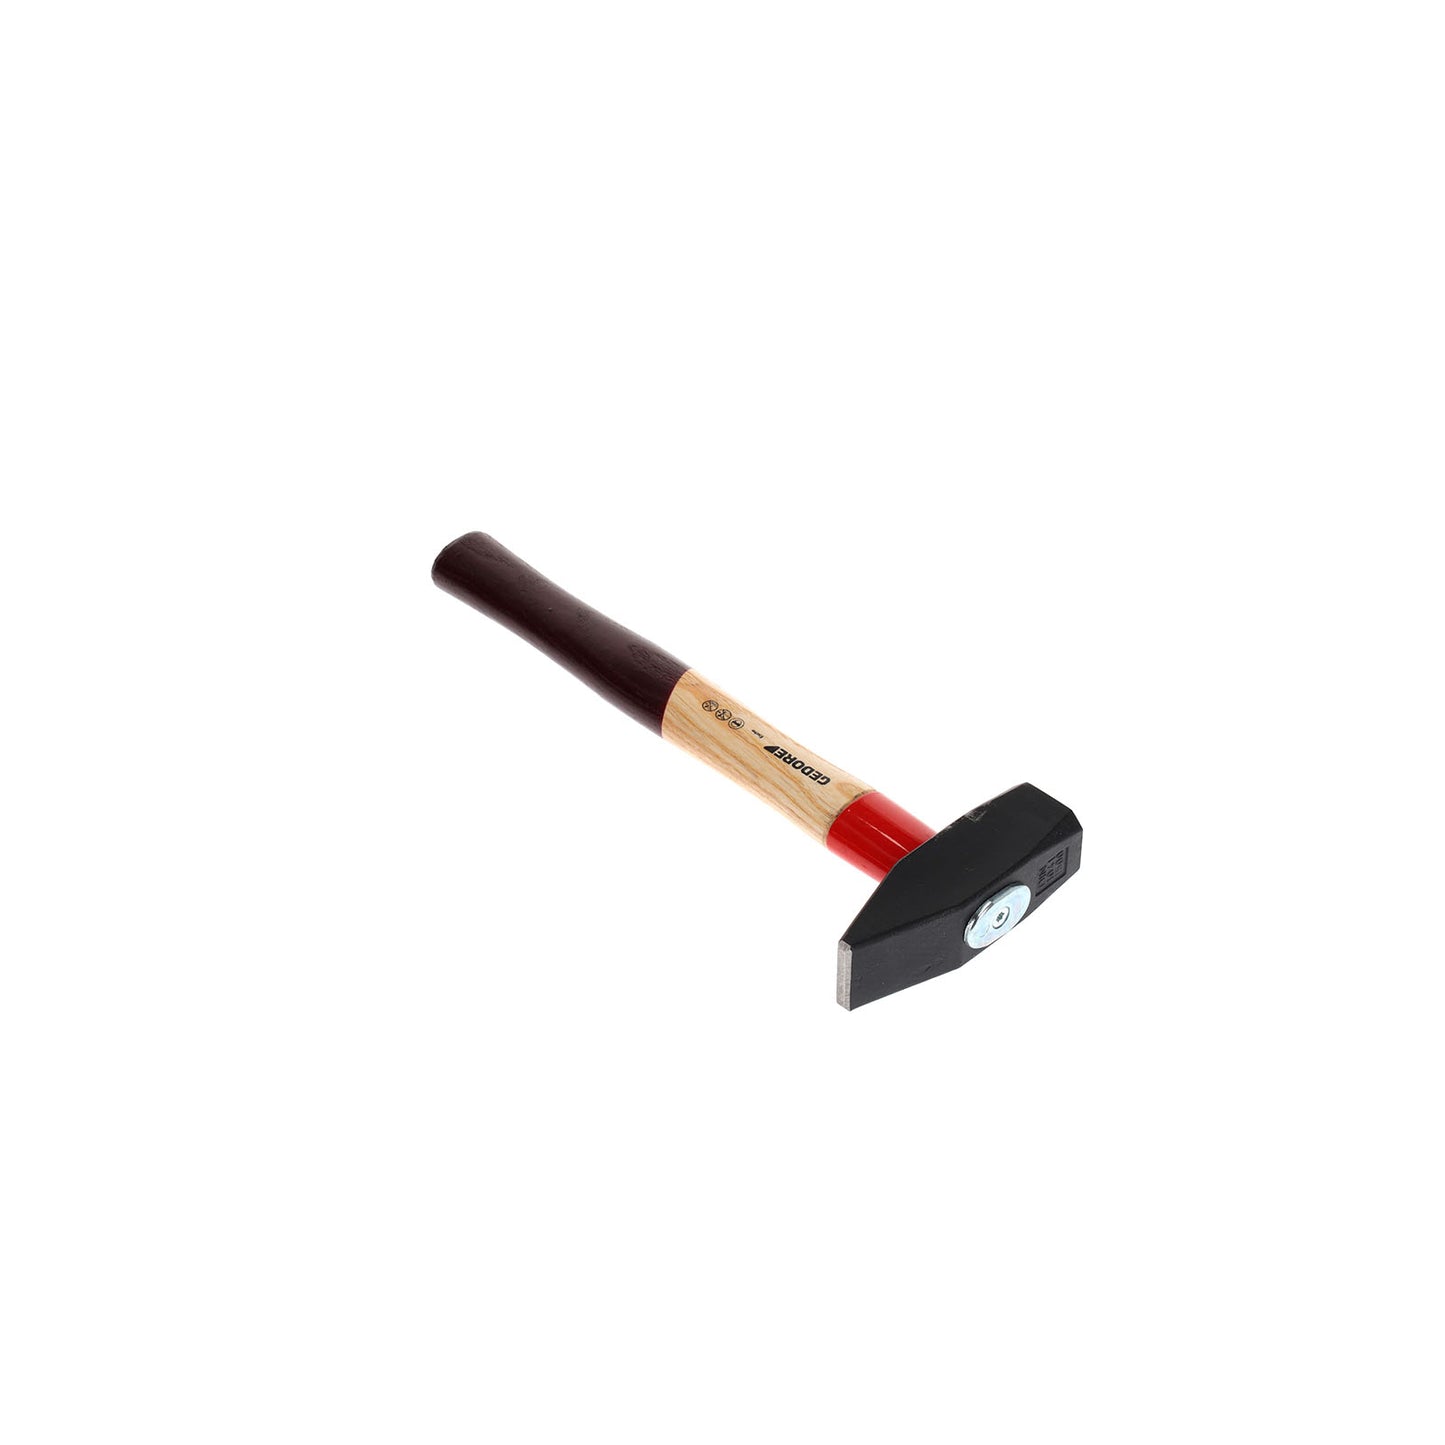 GEDORE 600 E-1500 - ROTBAND-PLUS Hammer 1.5Kg (8582690)